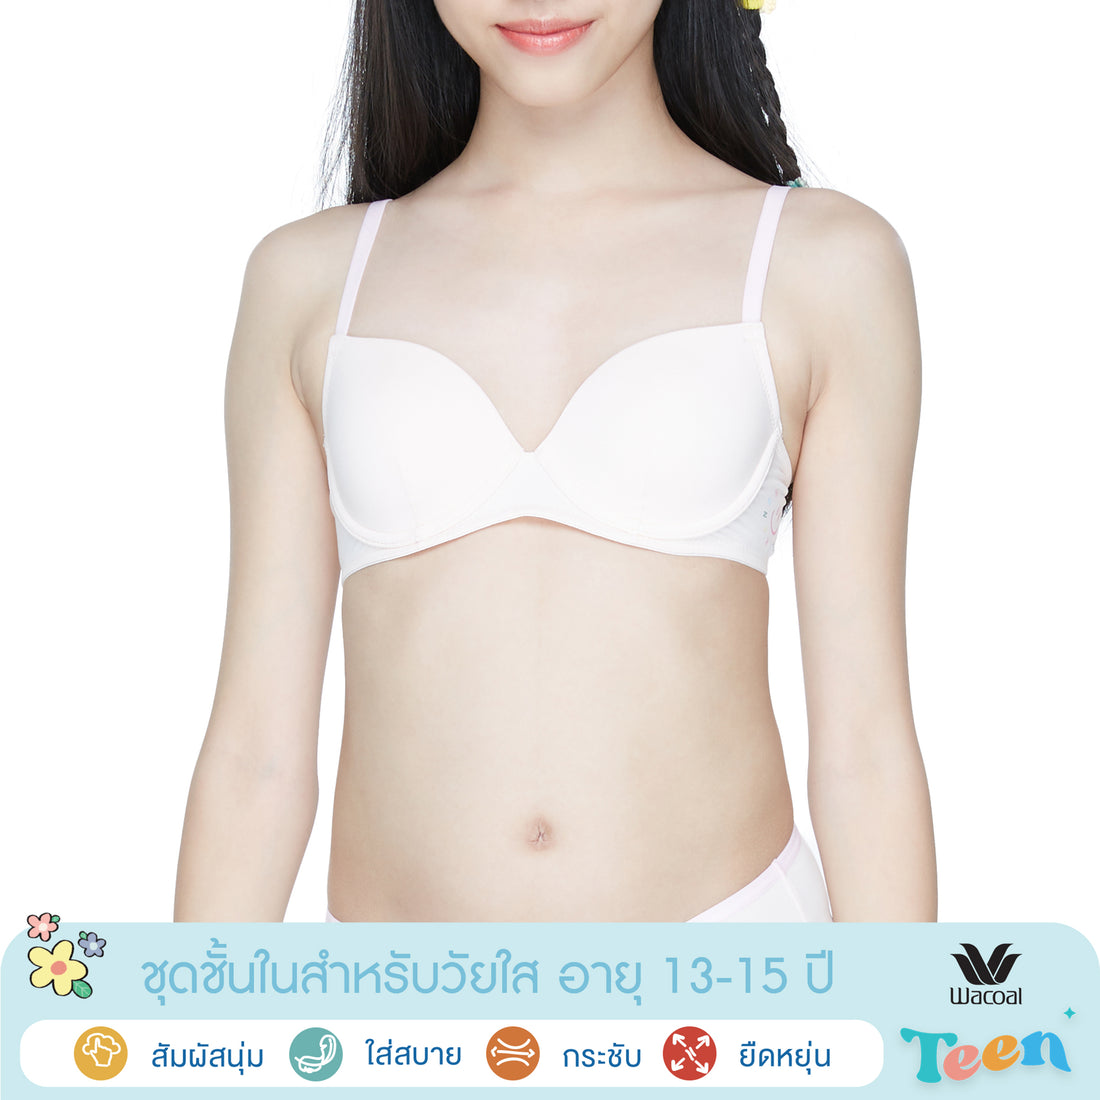 Wacoal Teen underwear for teenagers underwired bra model WBT501 orange flesh color (SP)